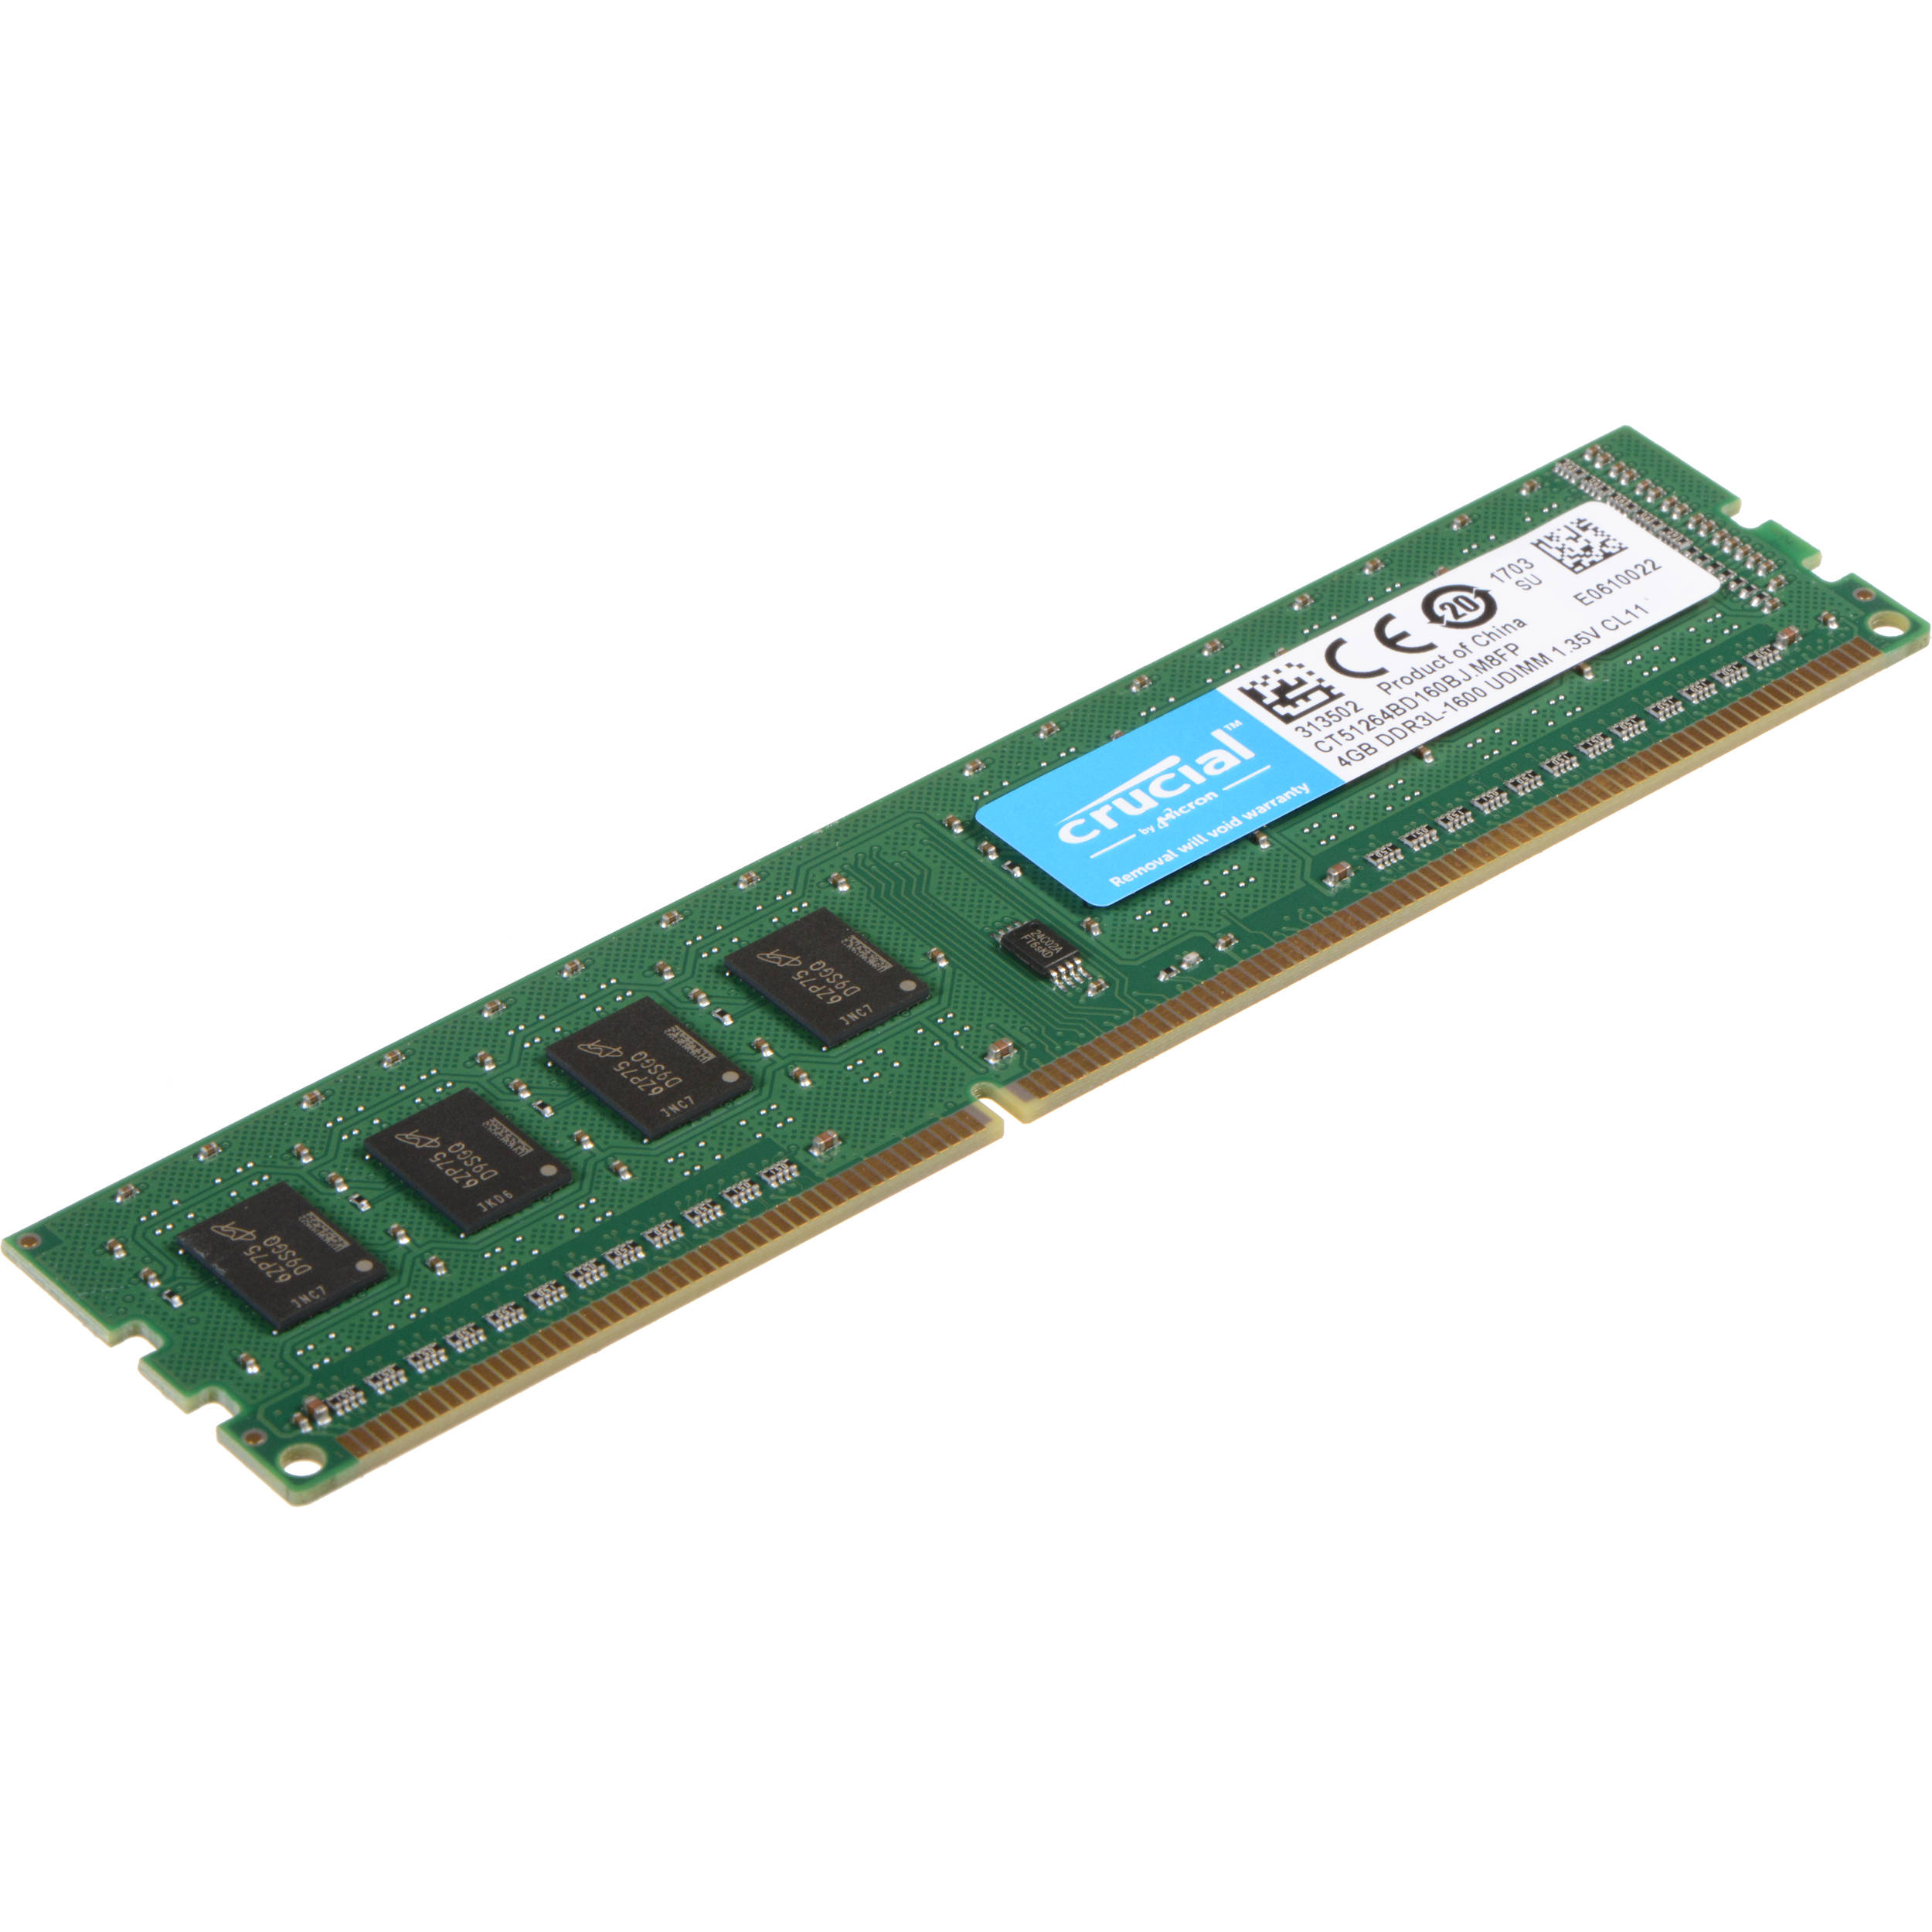 RAM DDR3 4GB PC1600 CRUCIAL MT/s (PC3L-12800) CL11 SR UNBUFFERED UDIMM 240pin FOR PC ,Desktop RAM